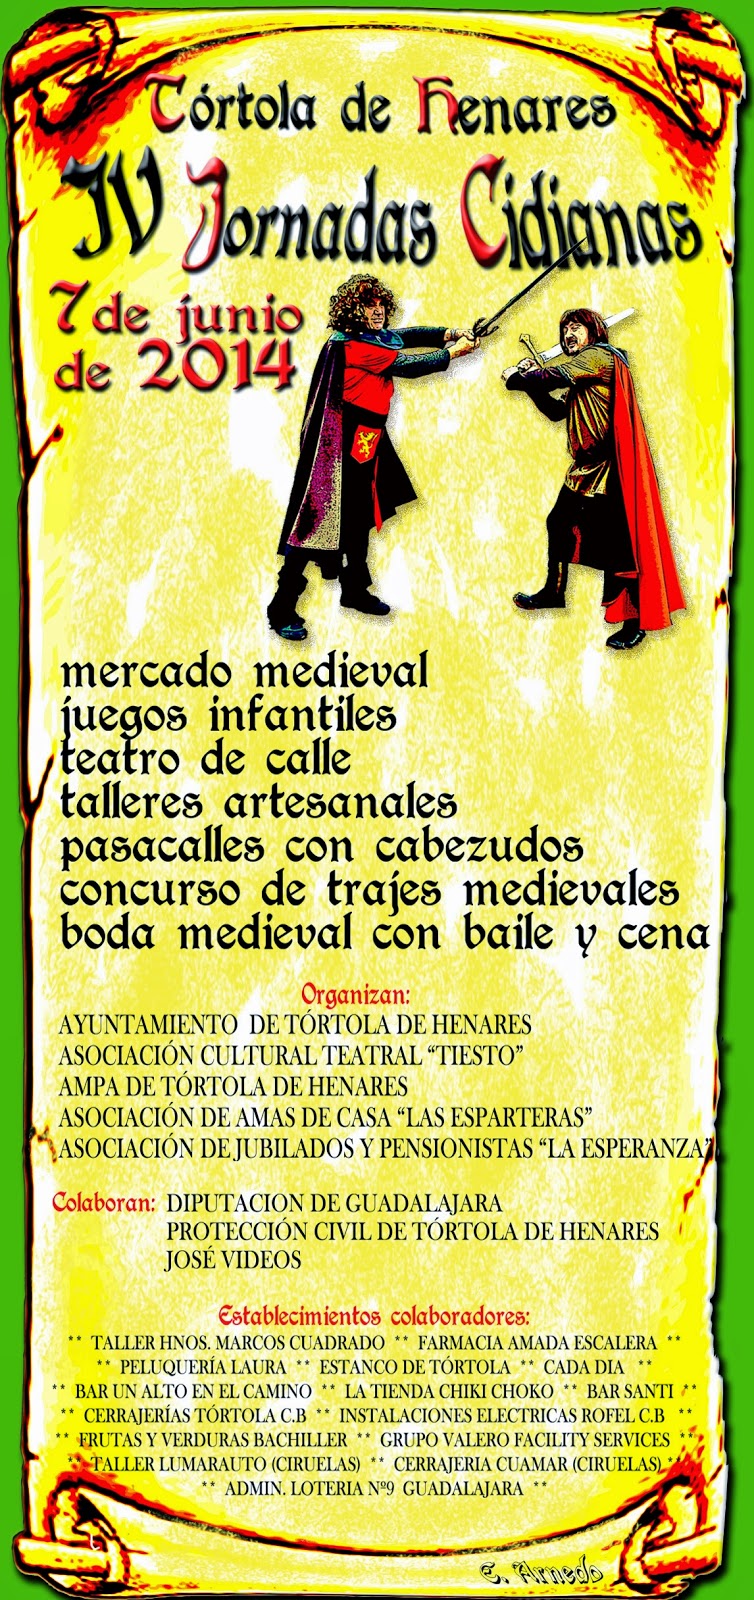 http://www.tortoladehenares.es/index.php/507-iv-jornadas-cidianas